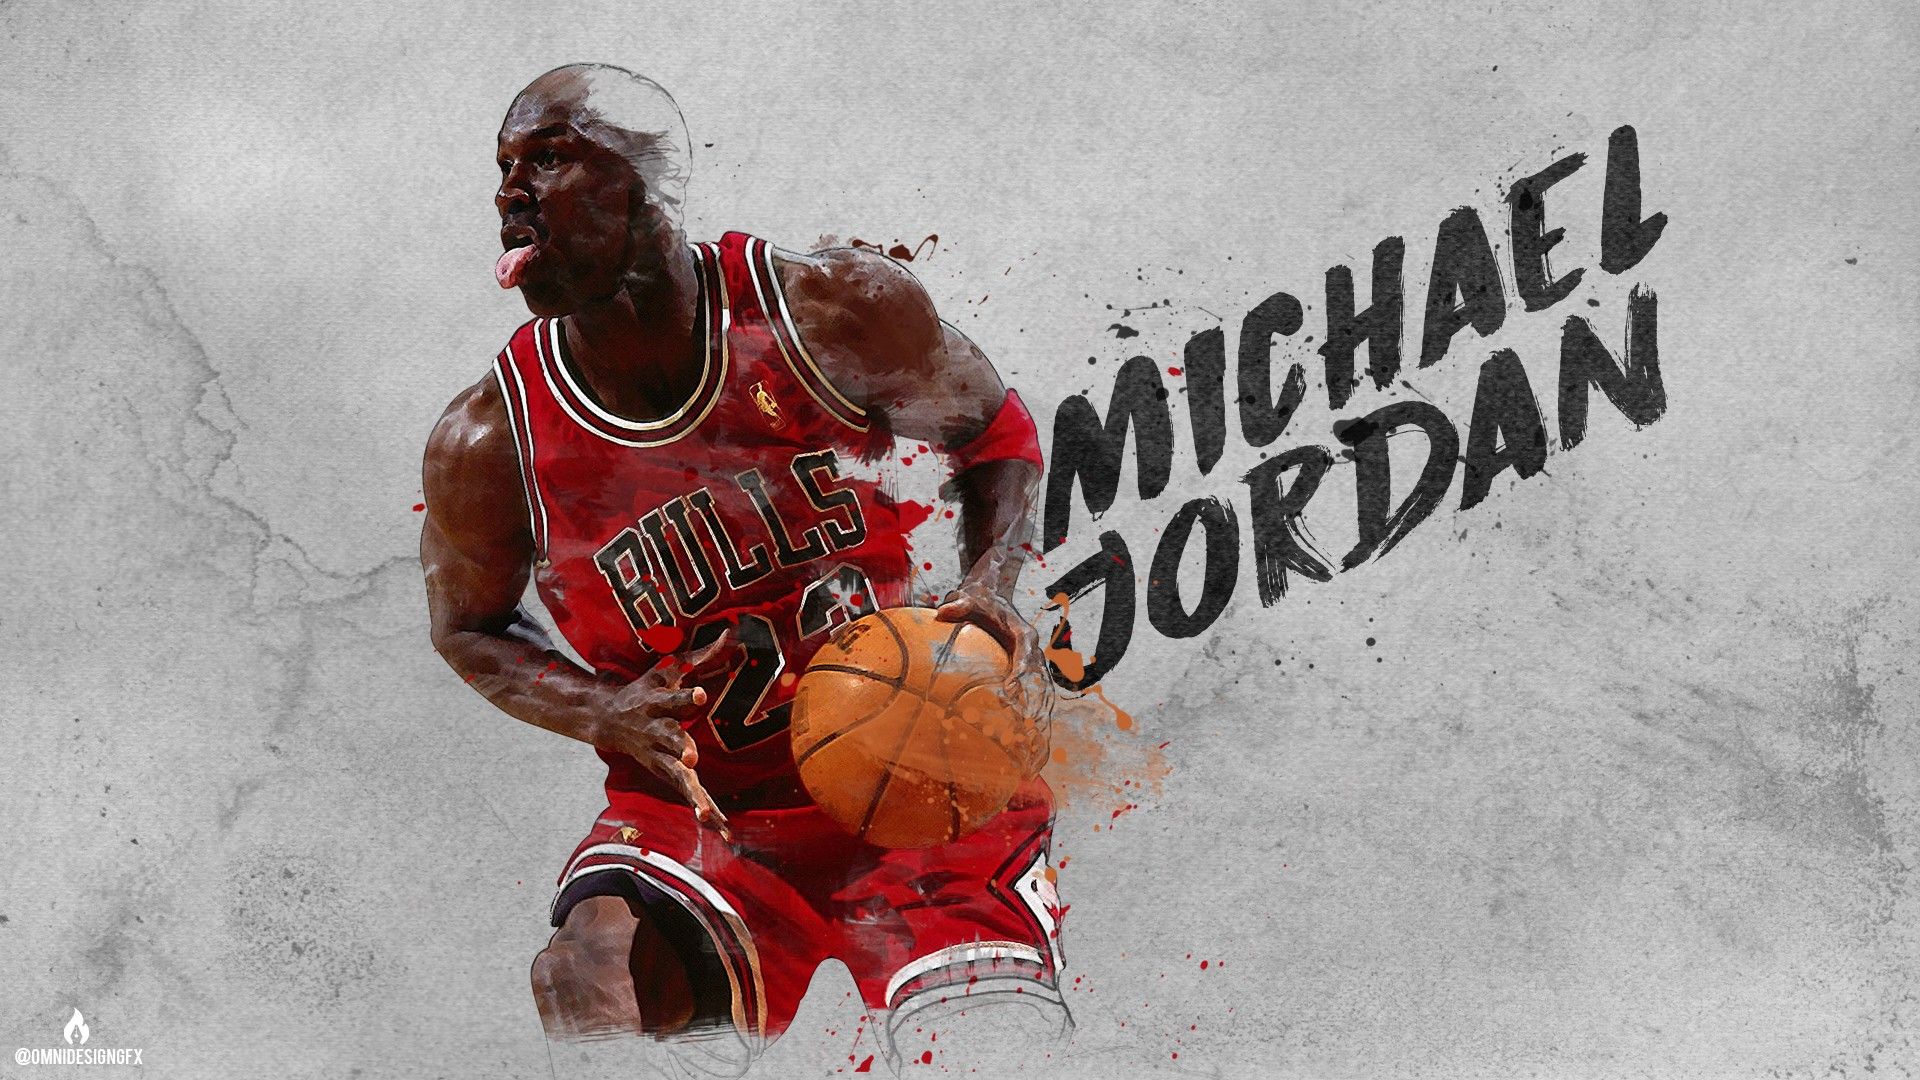 1920x1080 Michael Jordan desktop wallpaper. Michael Jordan